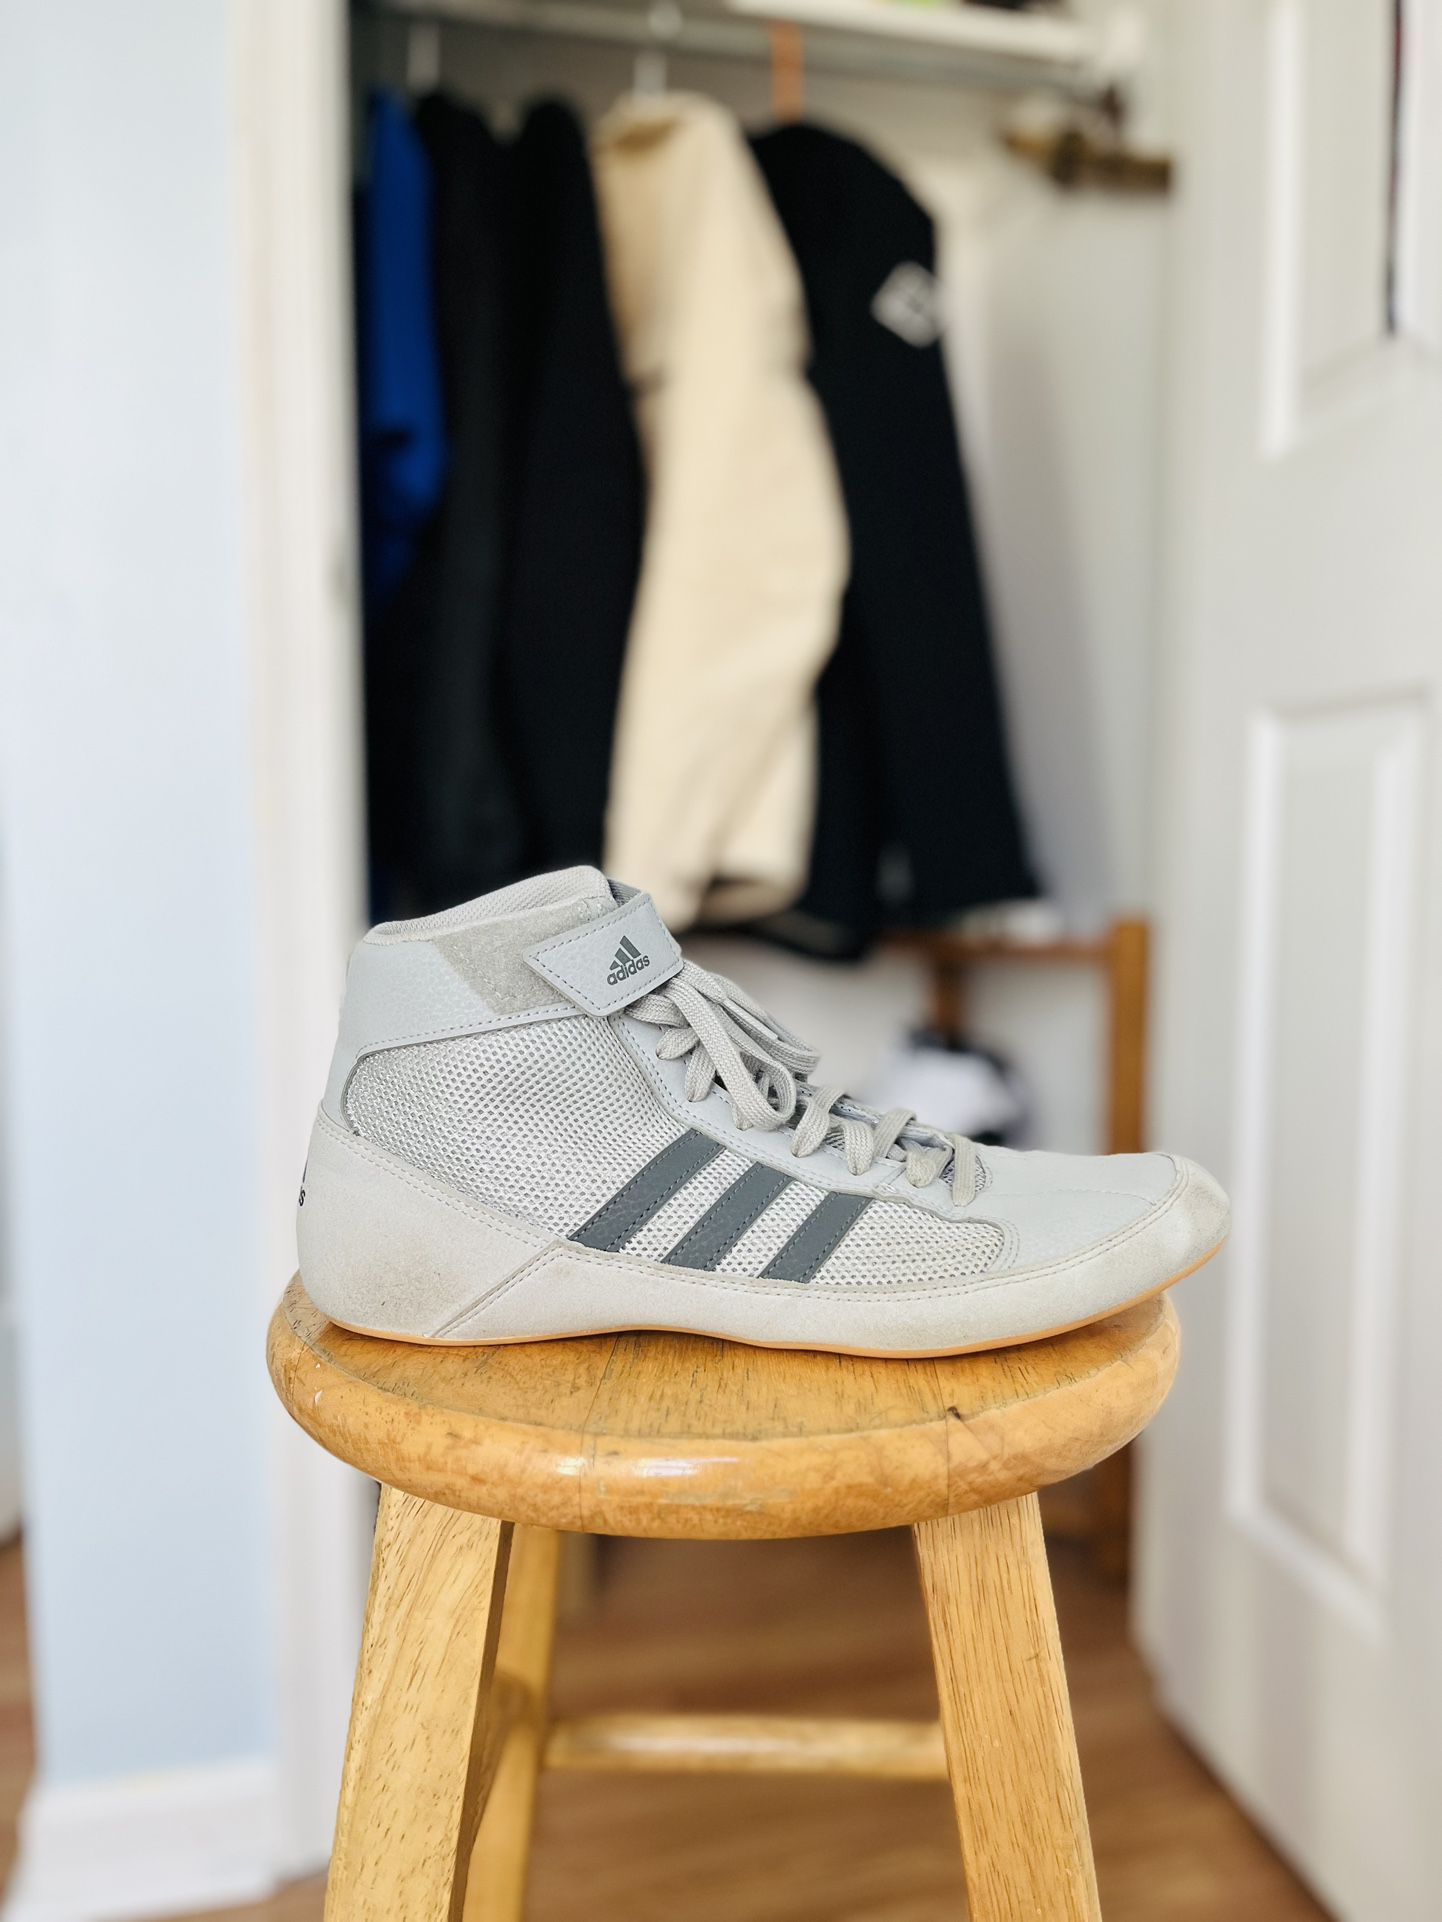 Adidas Wrestling Shoes Size 9 1/2